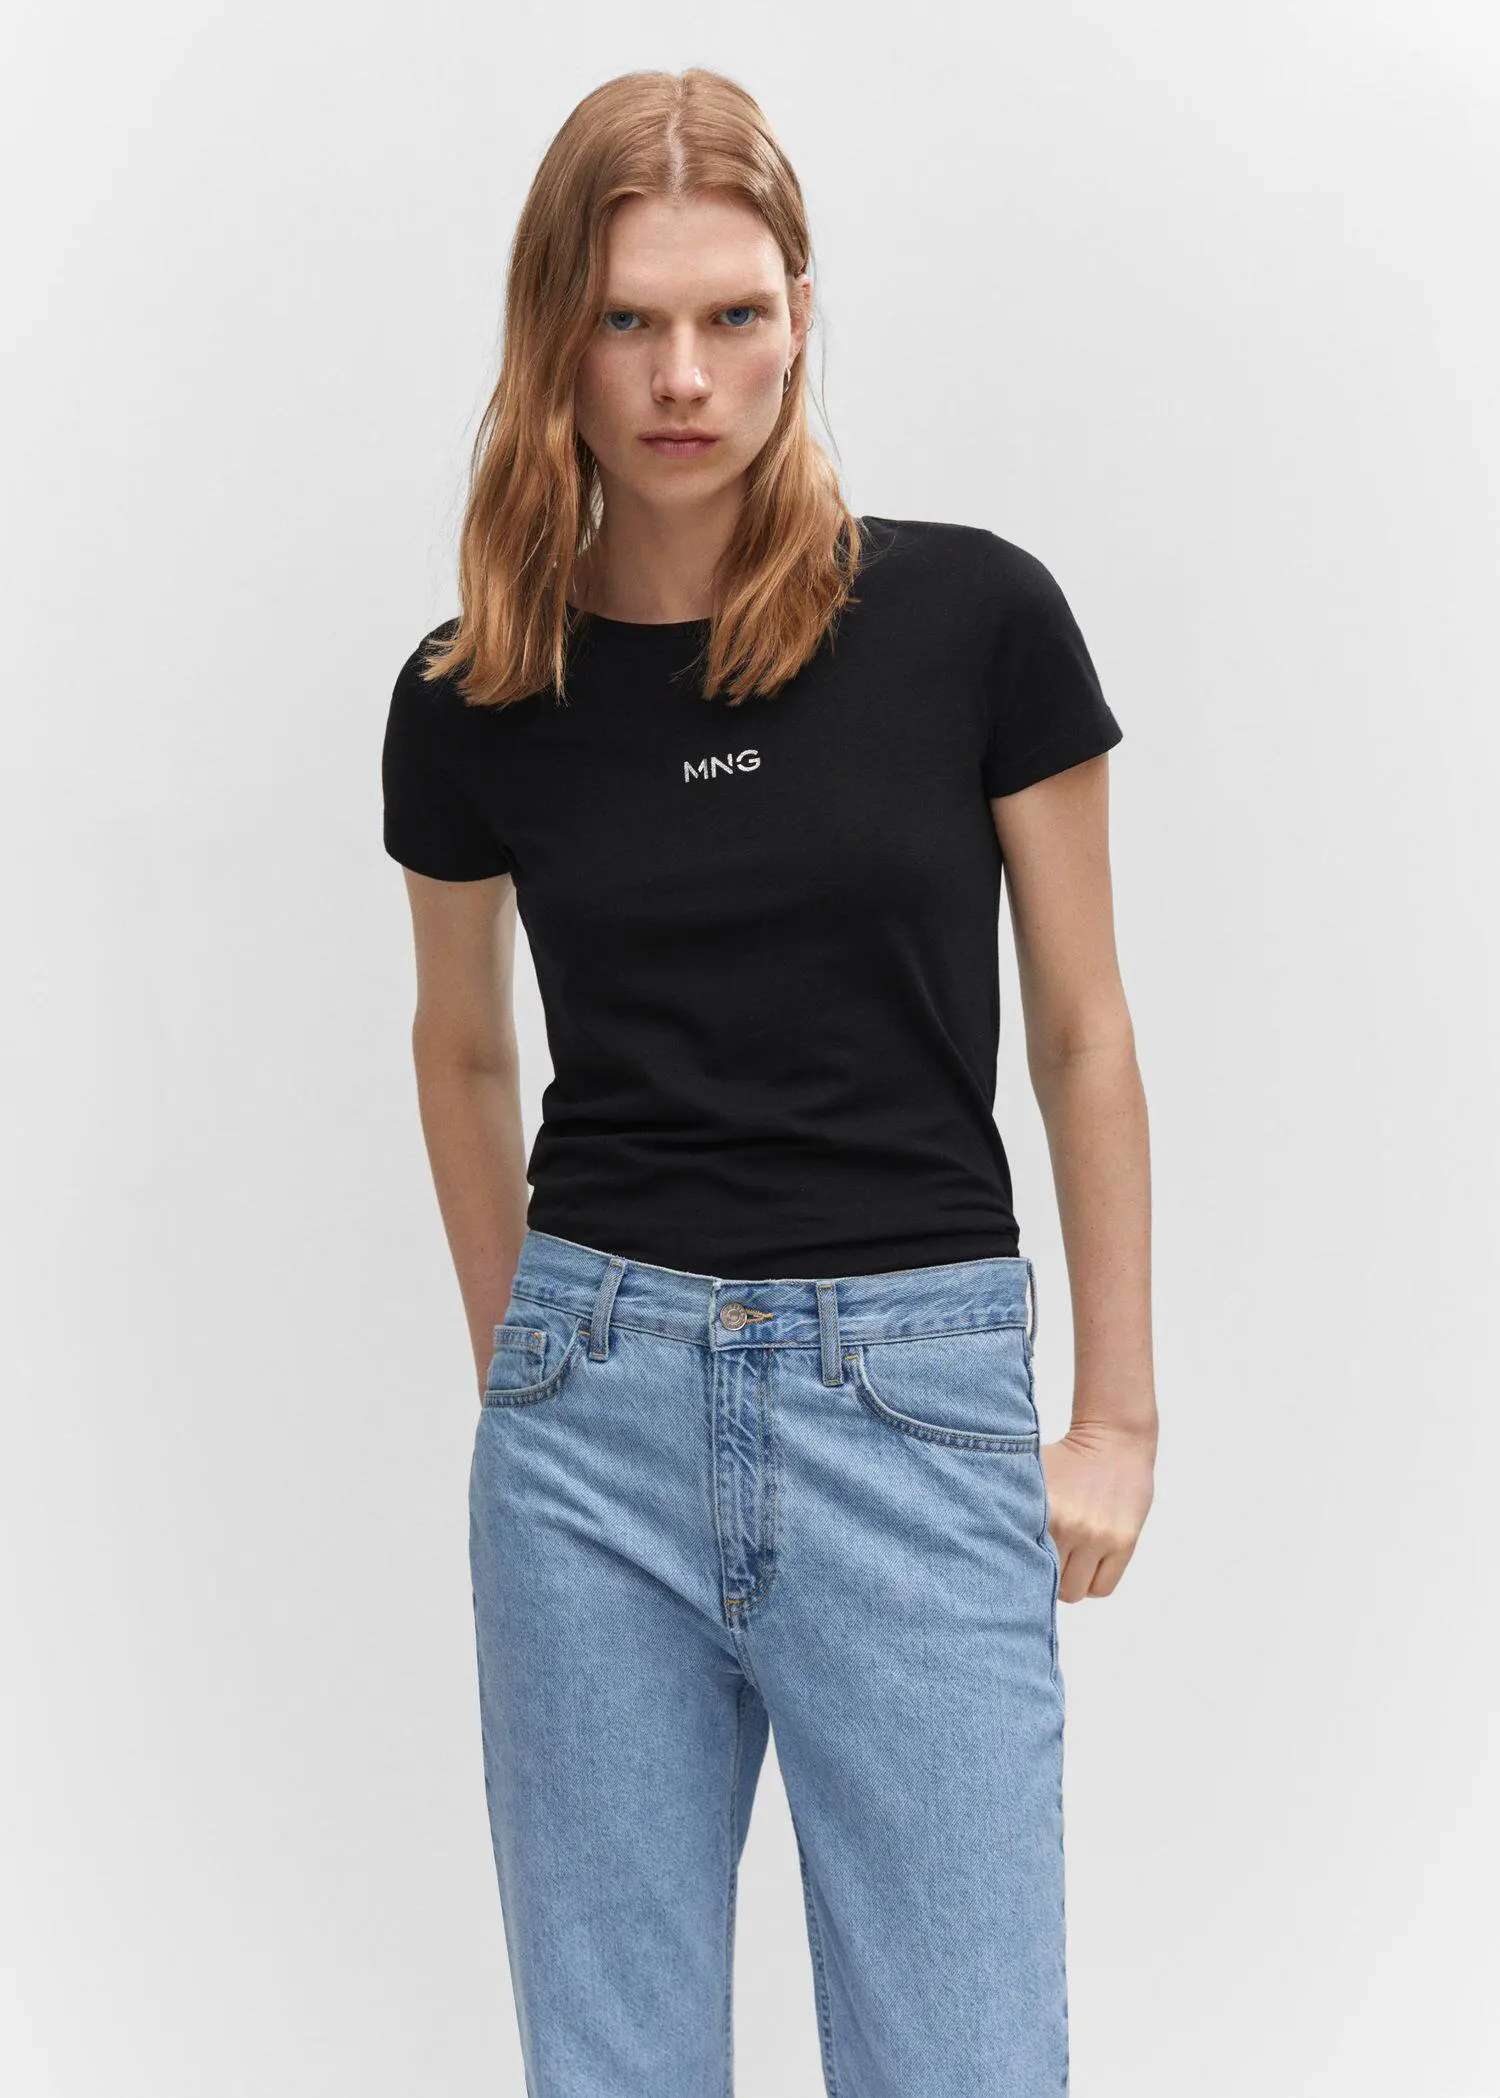 Mango Metallic logo T-shirt. a woman wearing a black t-shirt and jeans. 